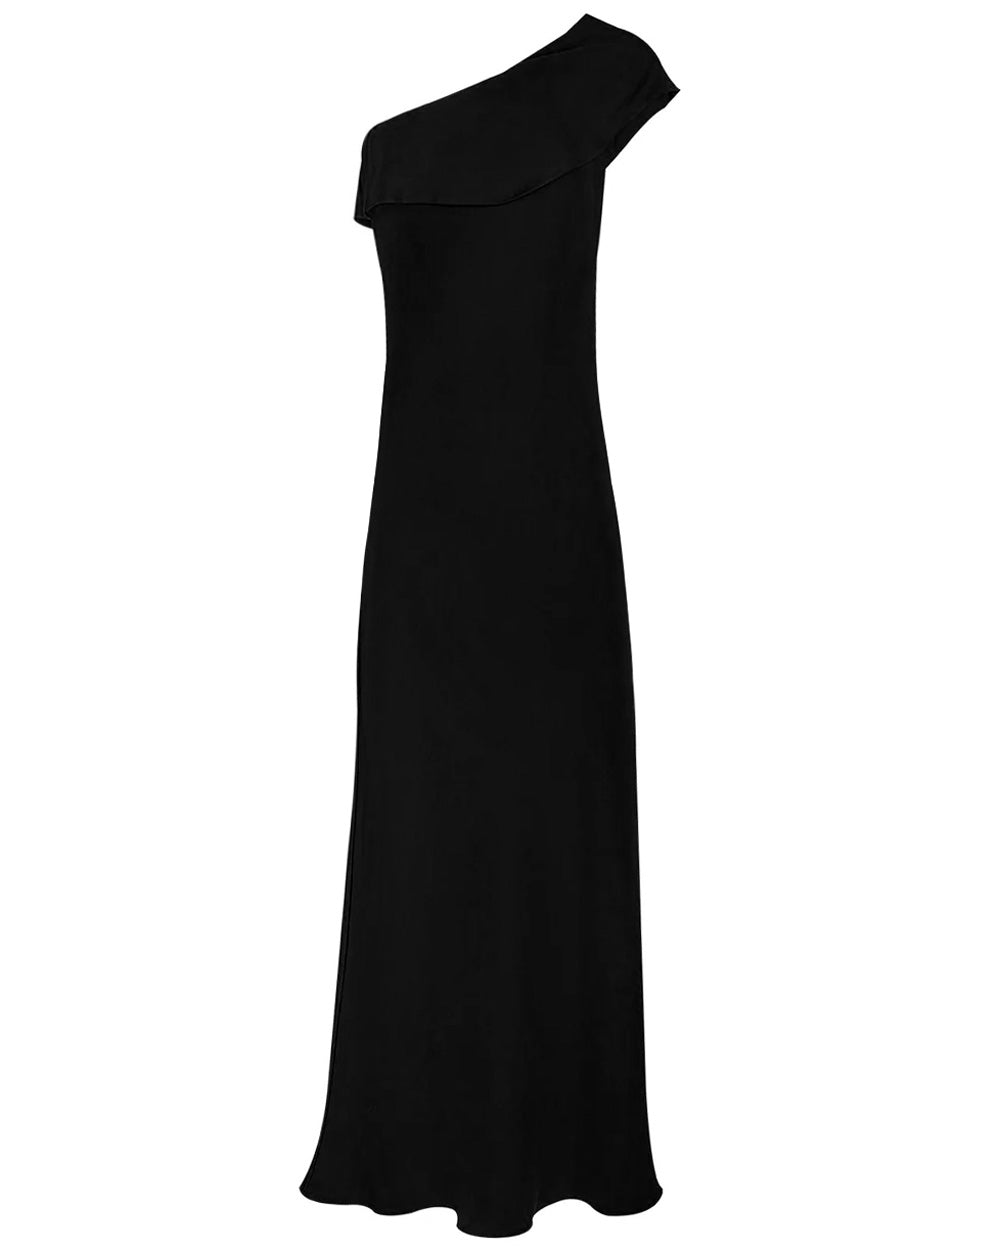 Black Petal Dress